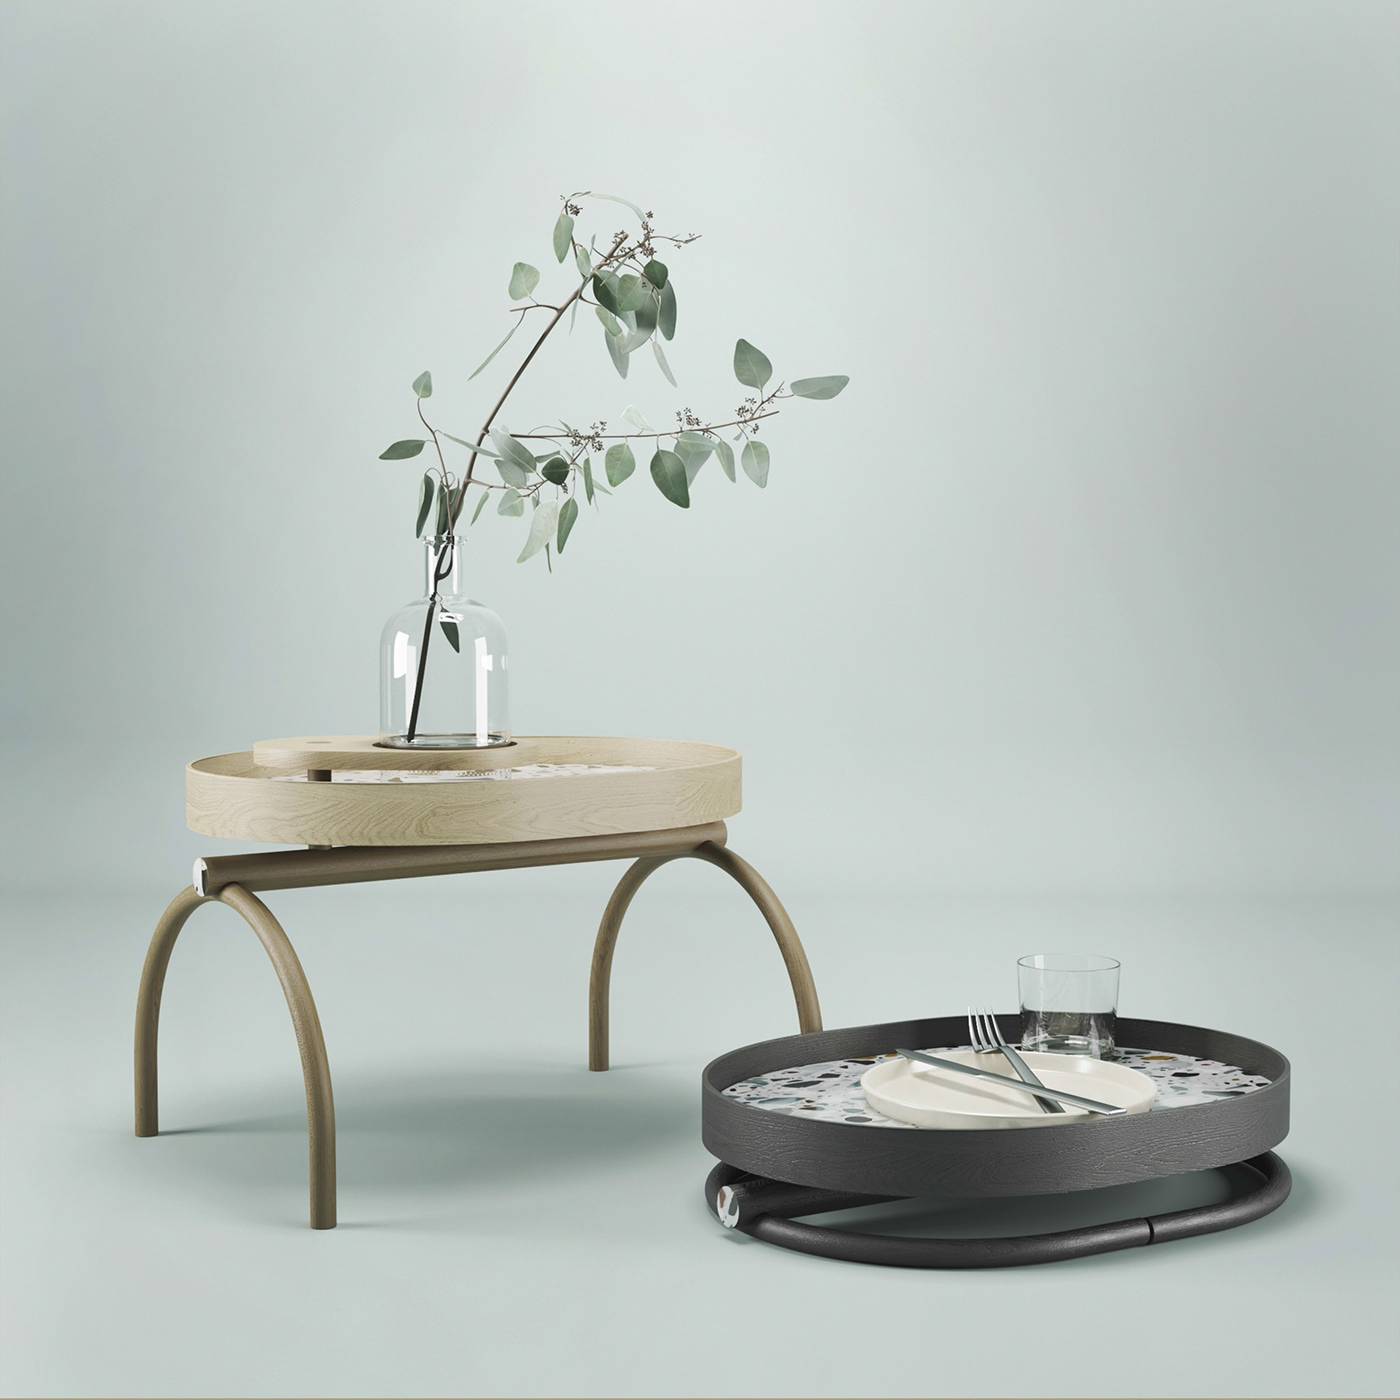 product_design design Industrial_design product furniture wood table furniture_design terazzo Design_idea